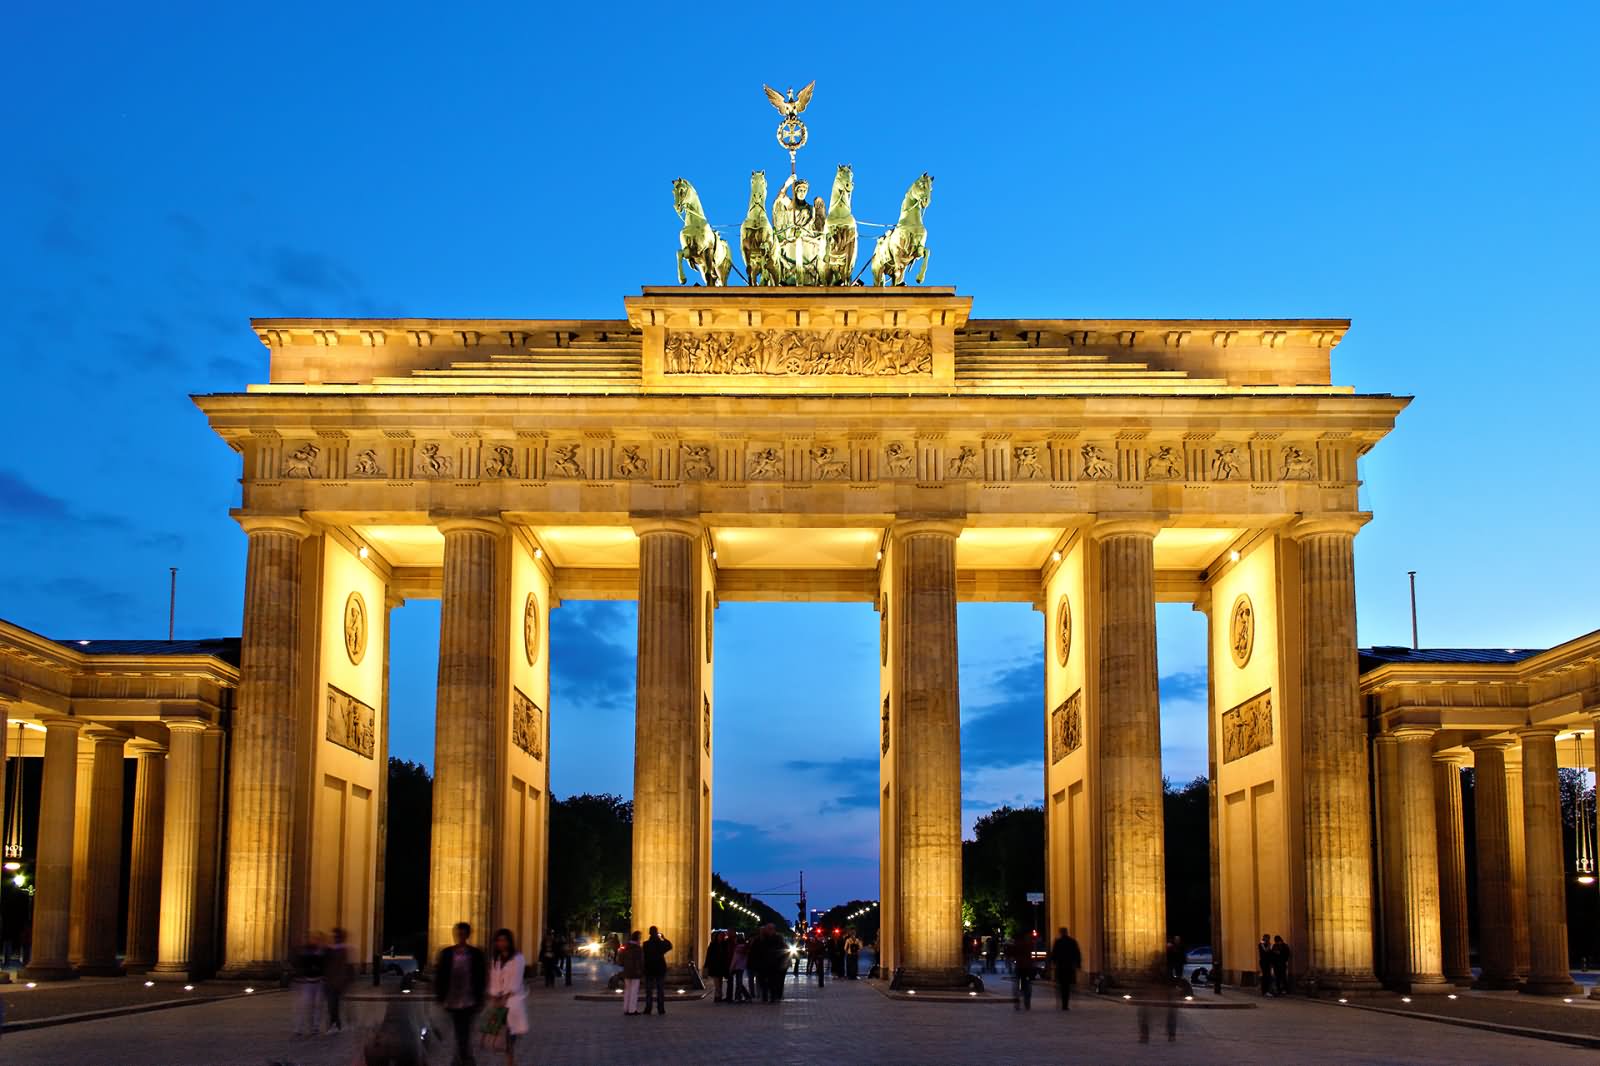 The Brandenburg Gate Night View Image